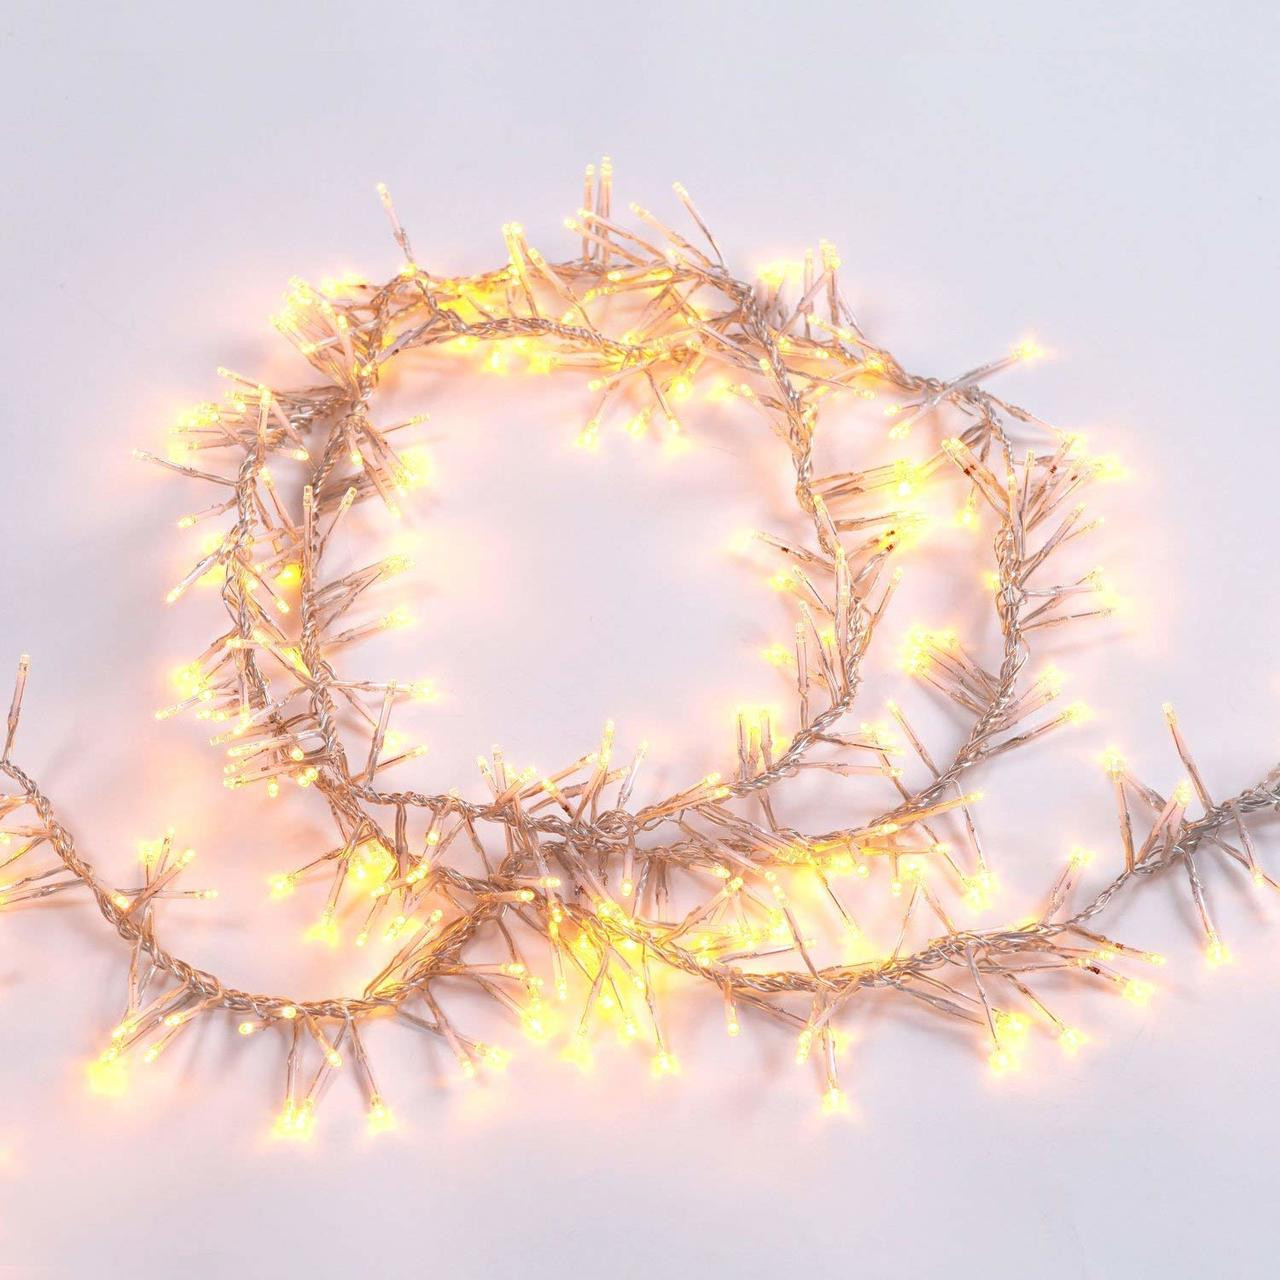 Lumineo 1512 LED Warm White Christmas Cluster Lights Set, Transparent ...